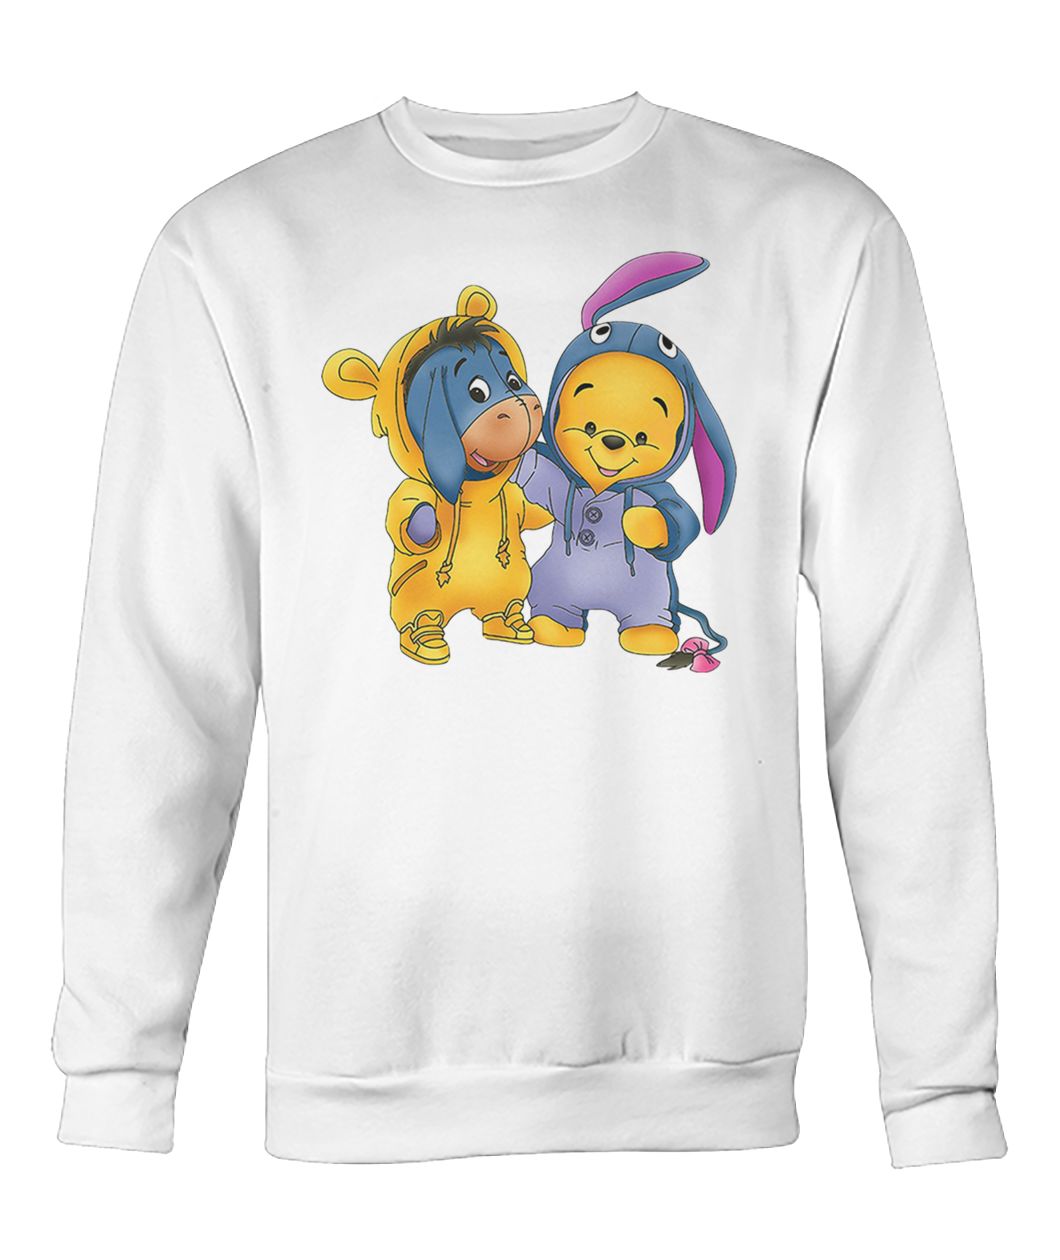 Baby pooh and eeyore winnie the pooh crew neck sweatshirt